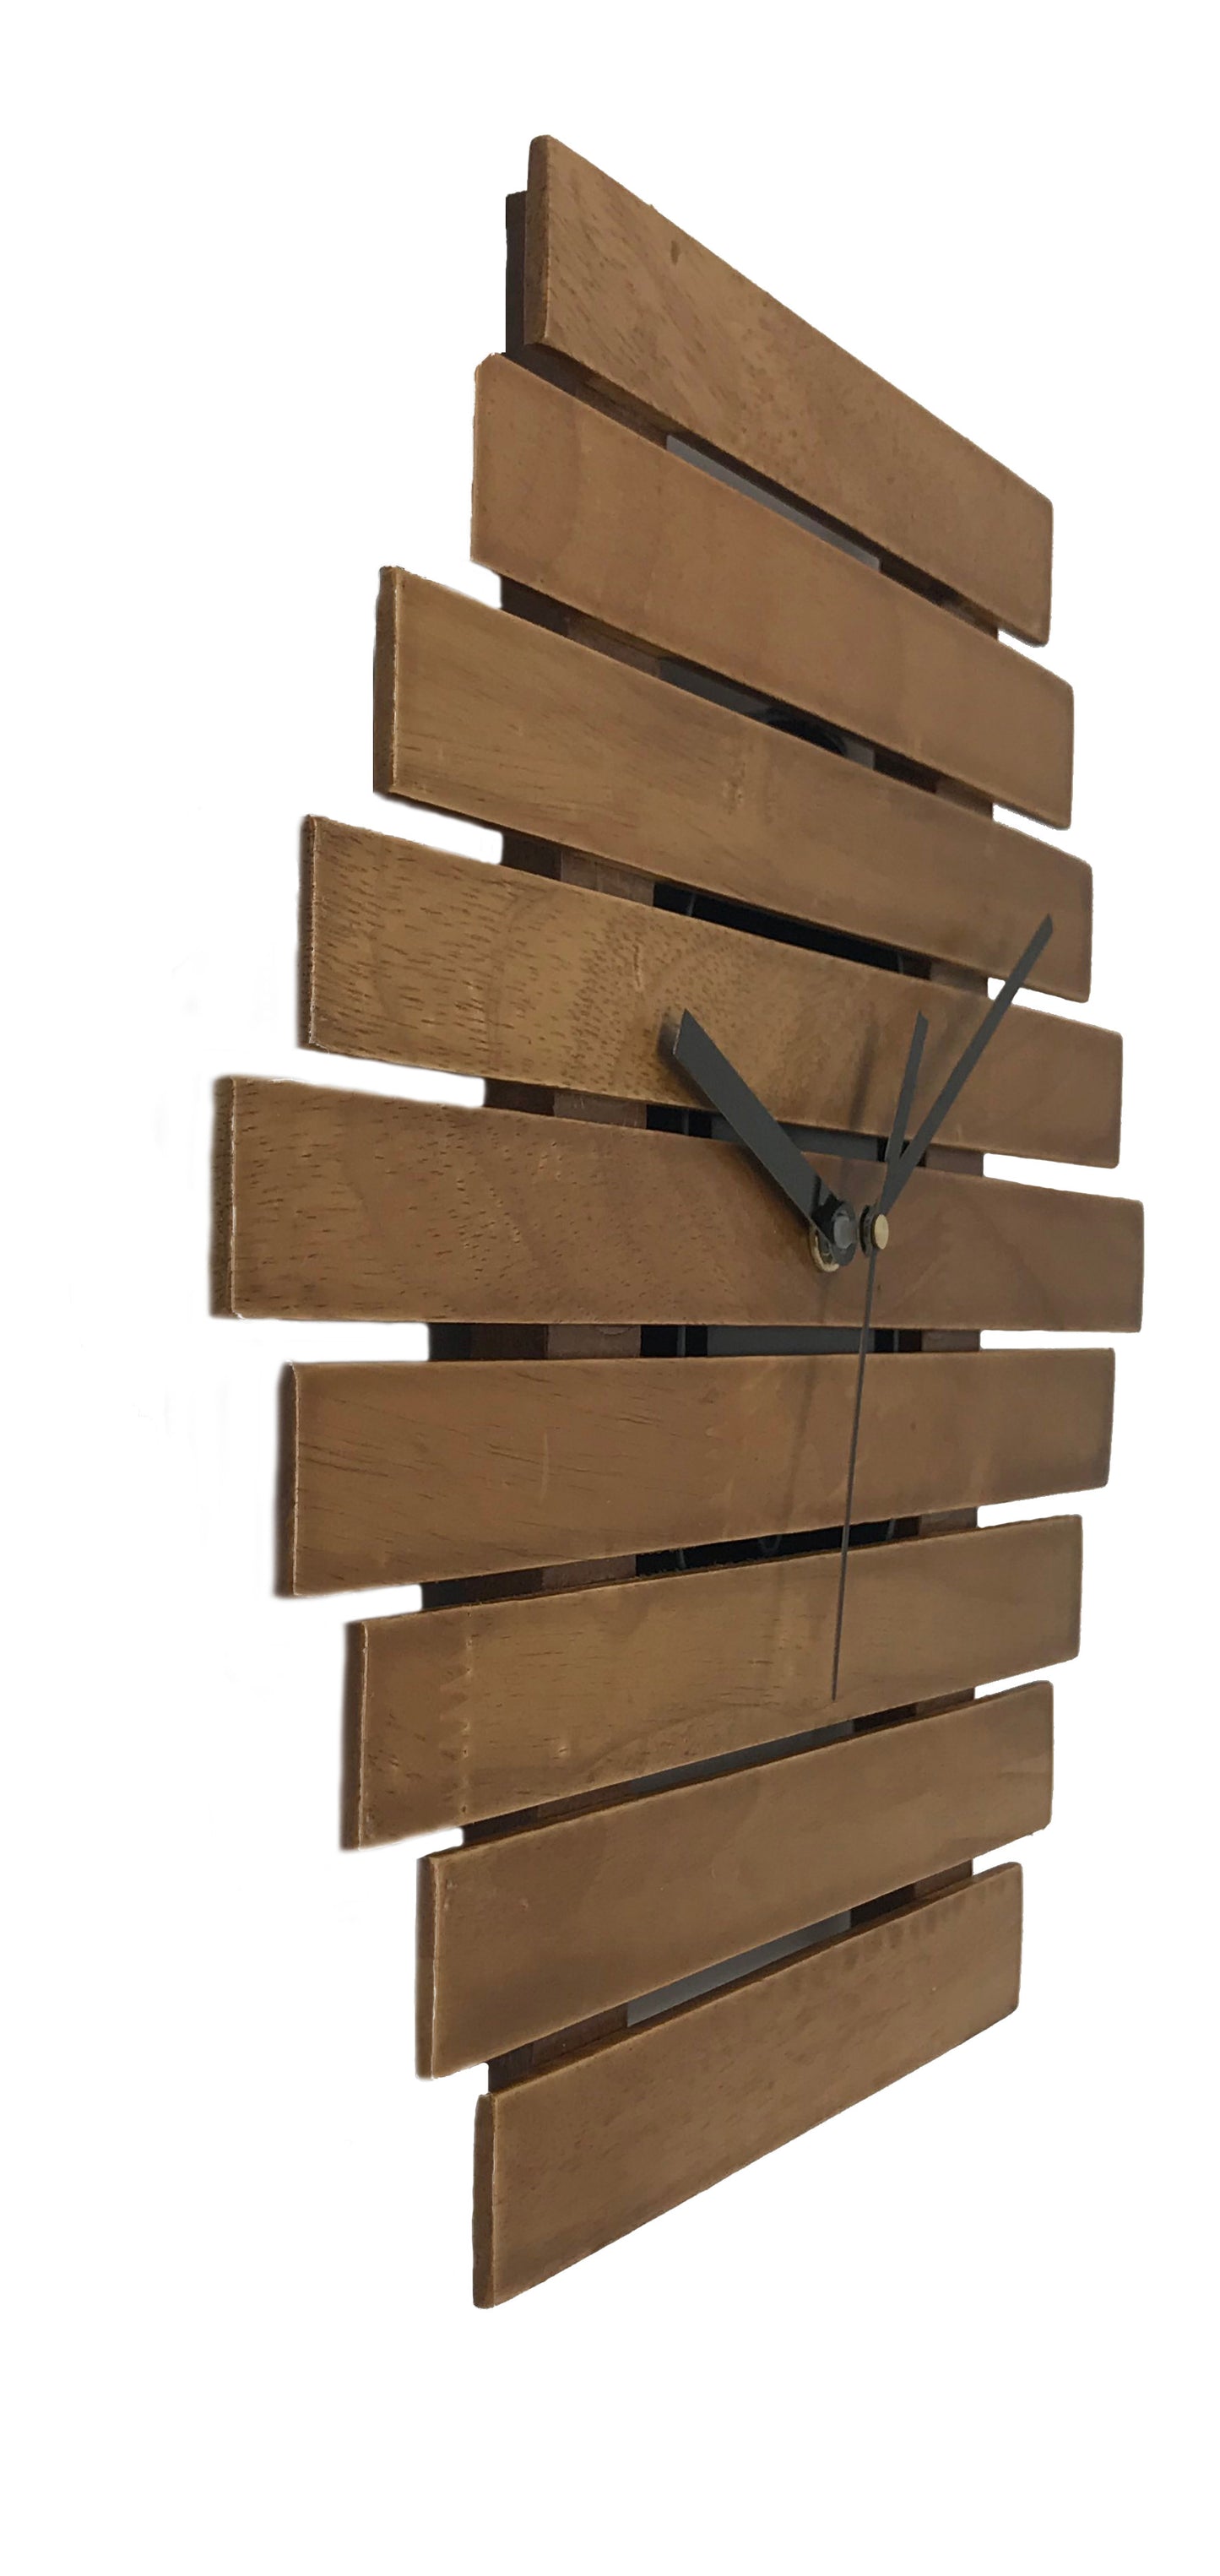 Horizontal Slotted Wall clock